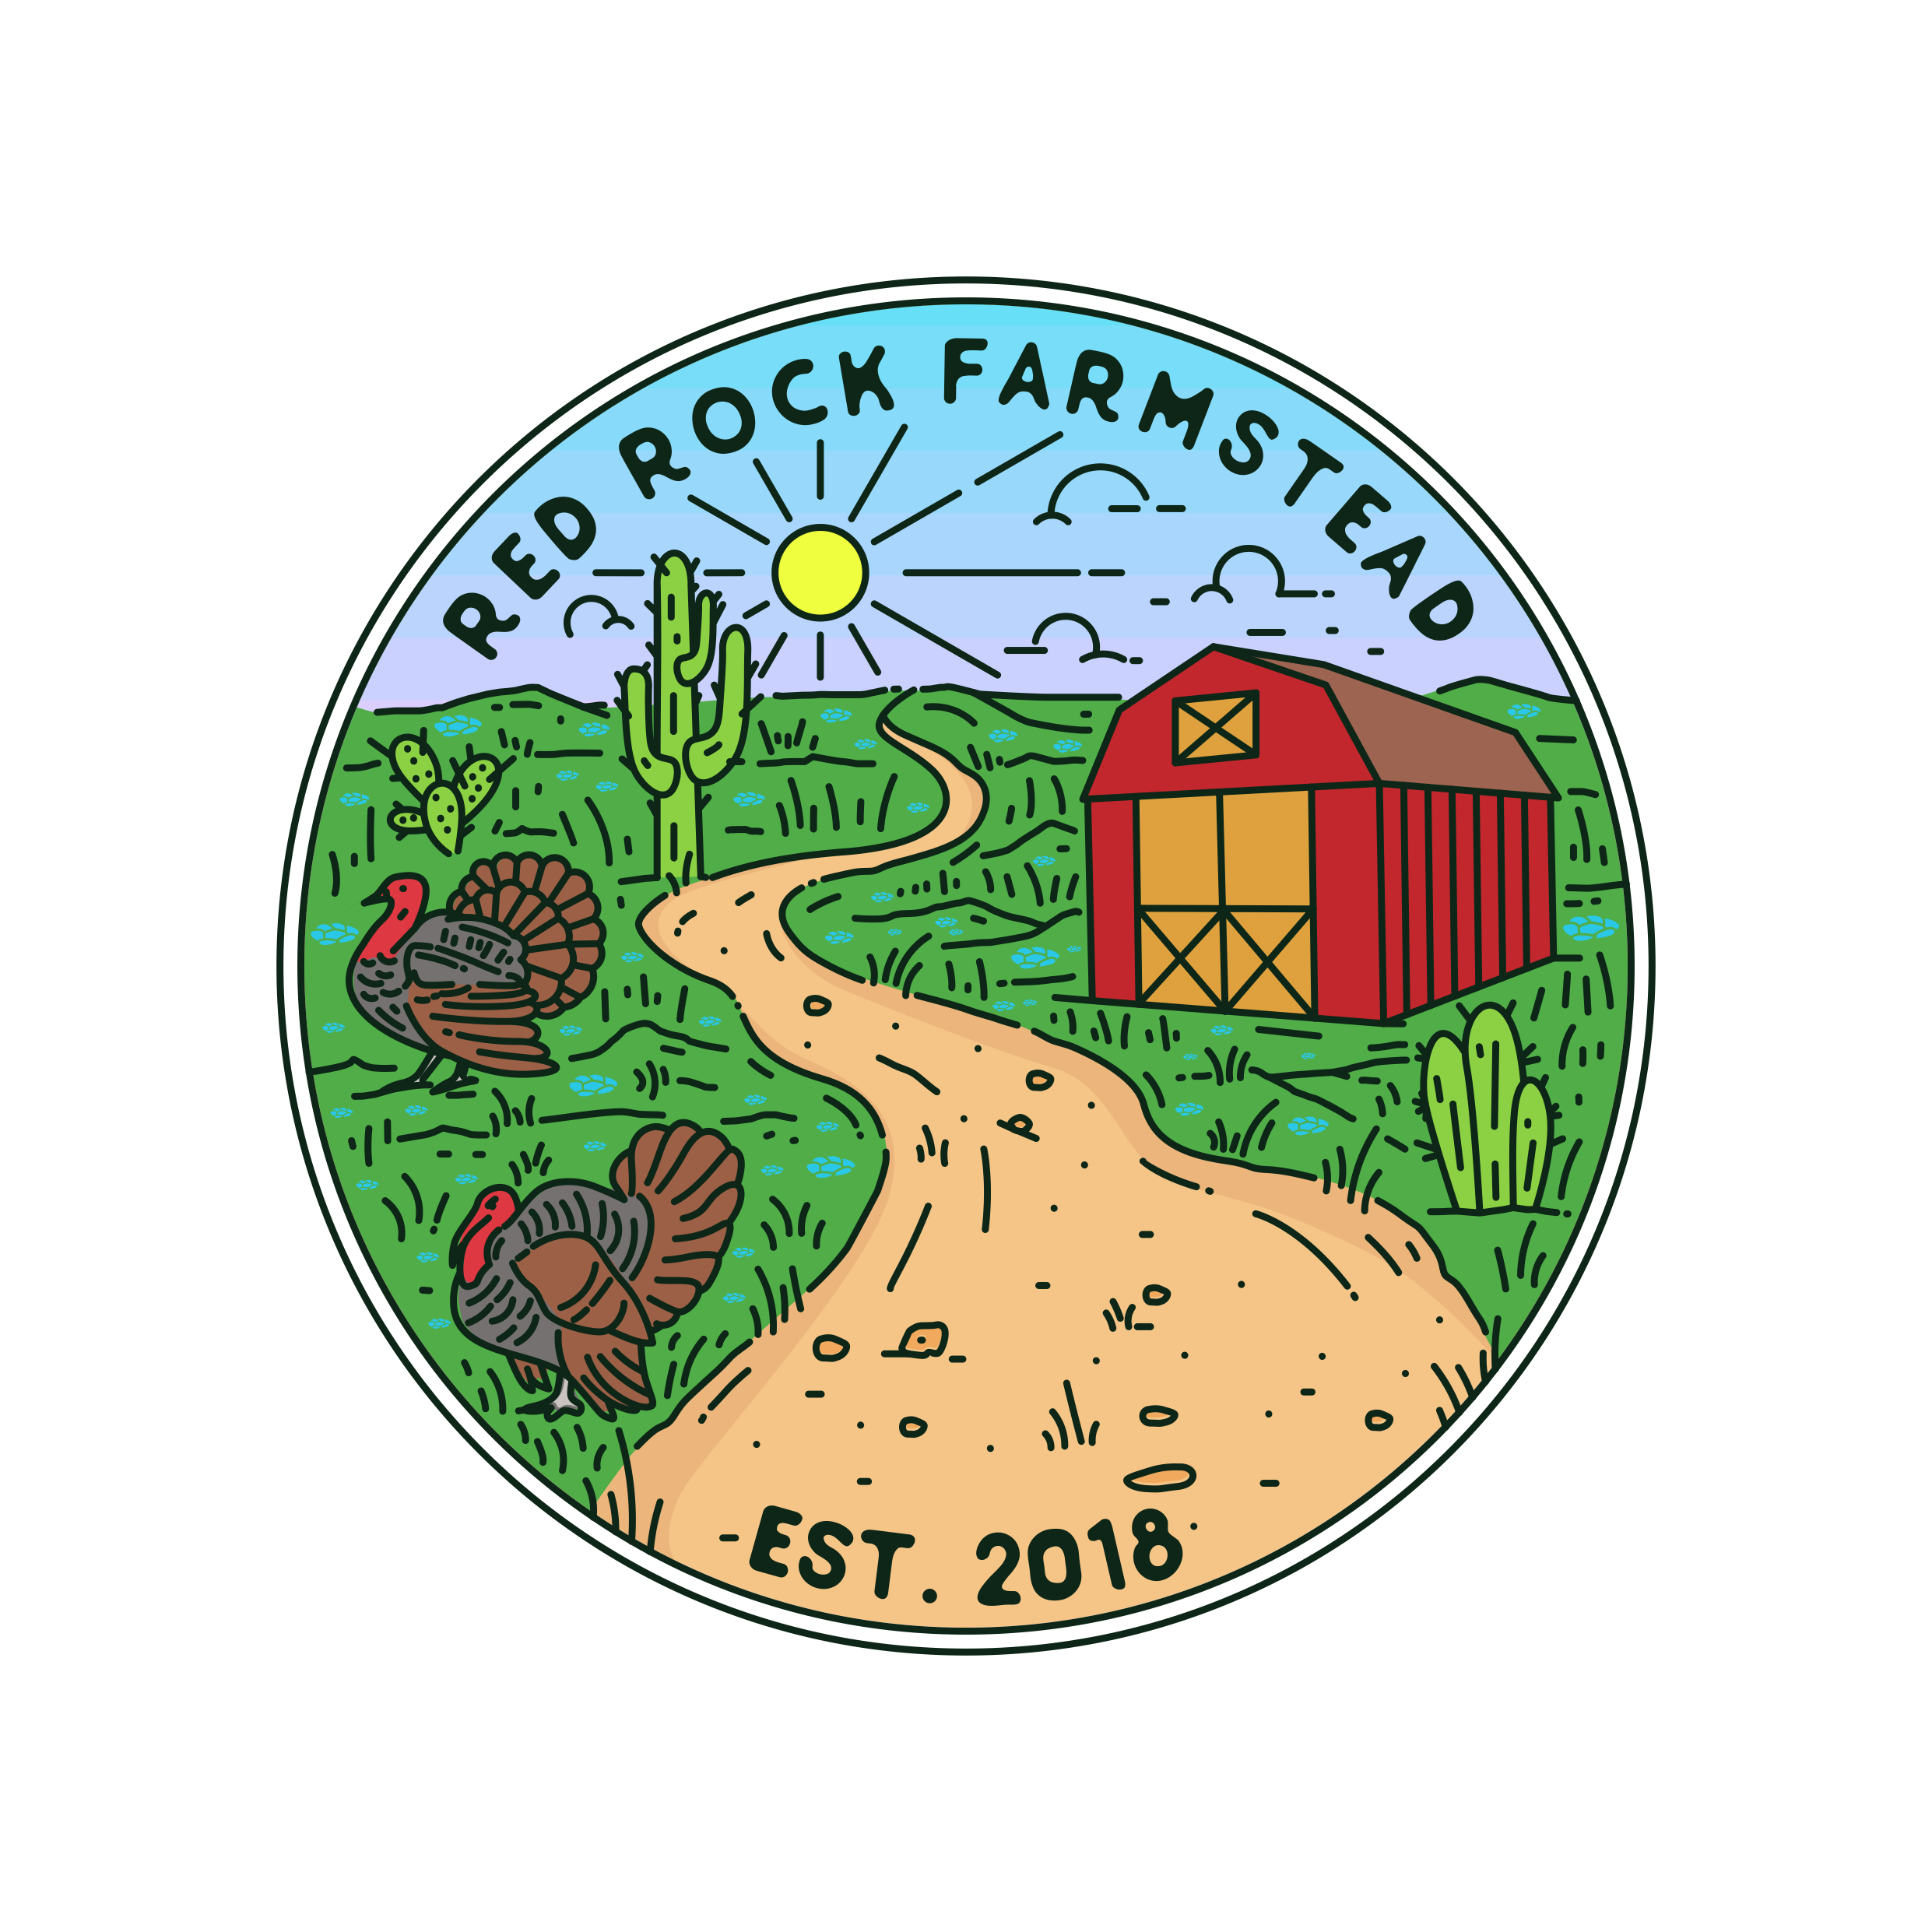 Red Rock Farmstead